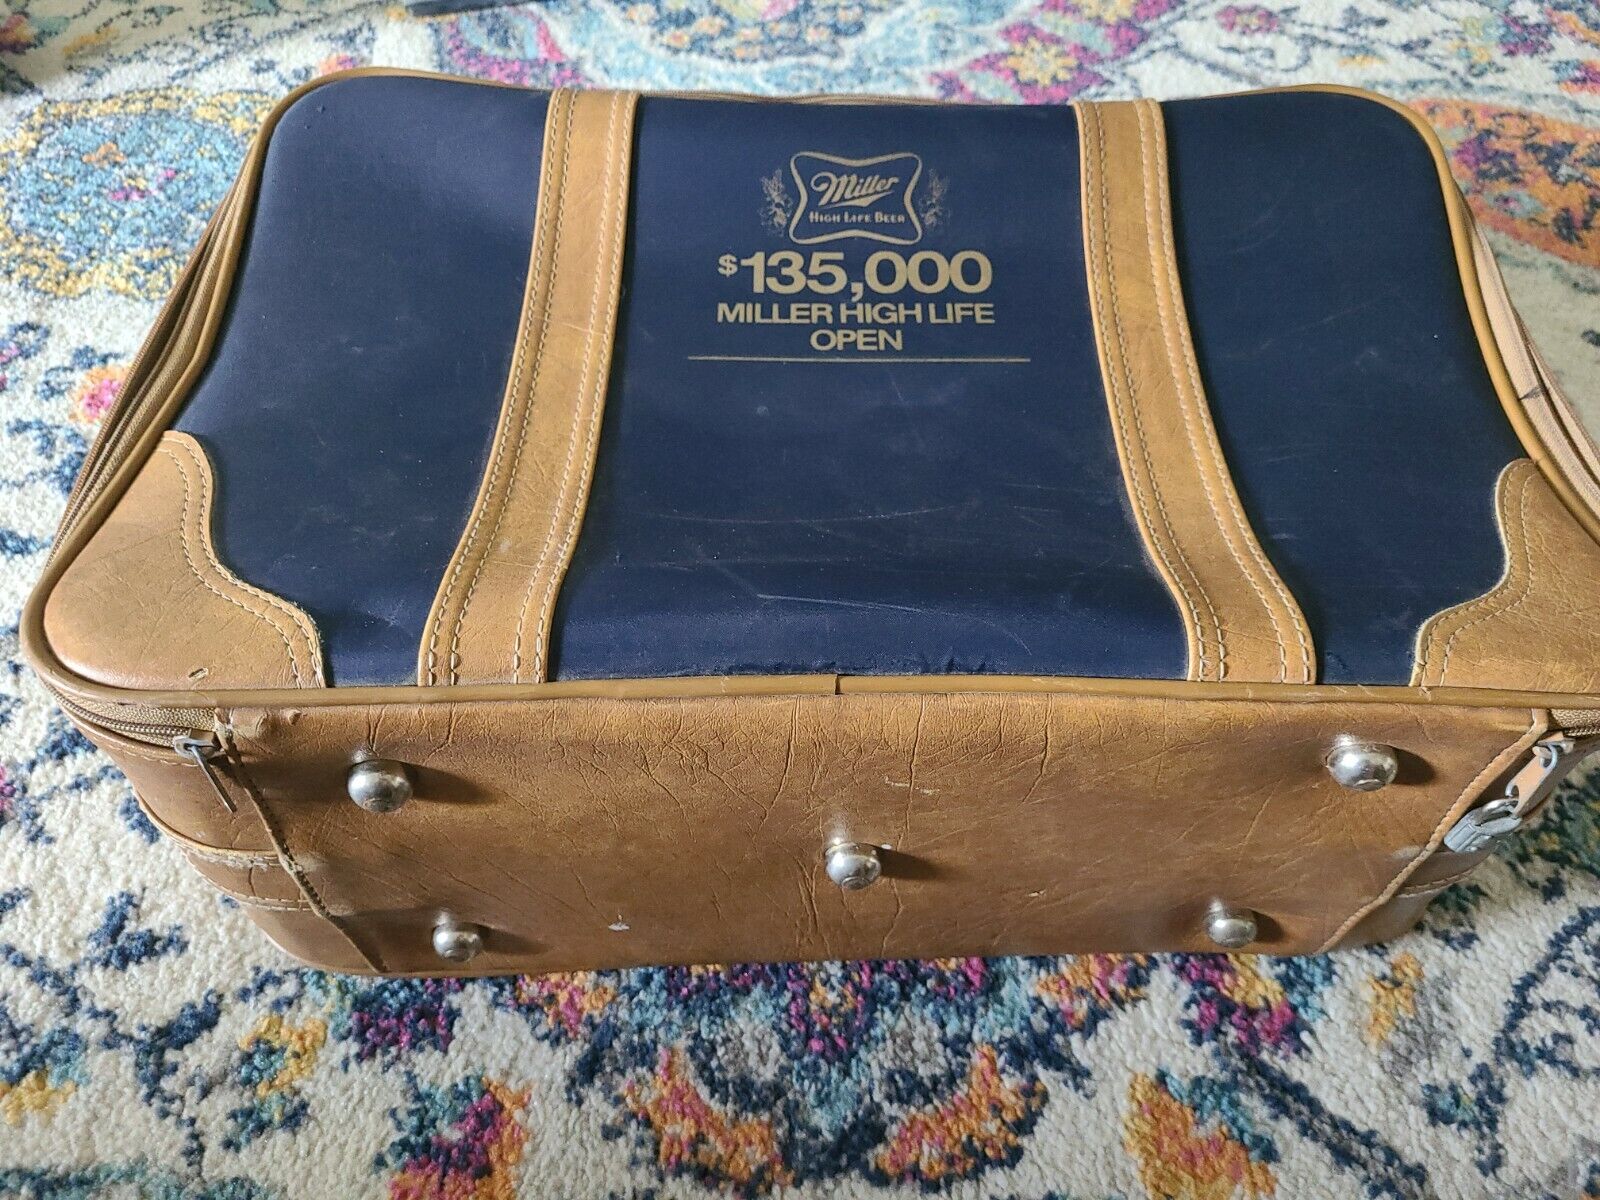 Vintage Brunswick Bowling $135,000 Miller High Life Open Suitcase